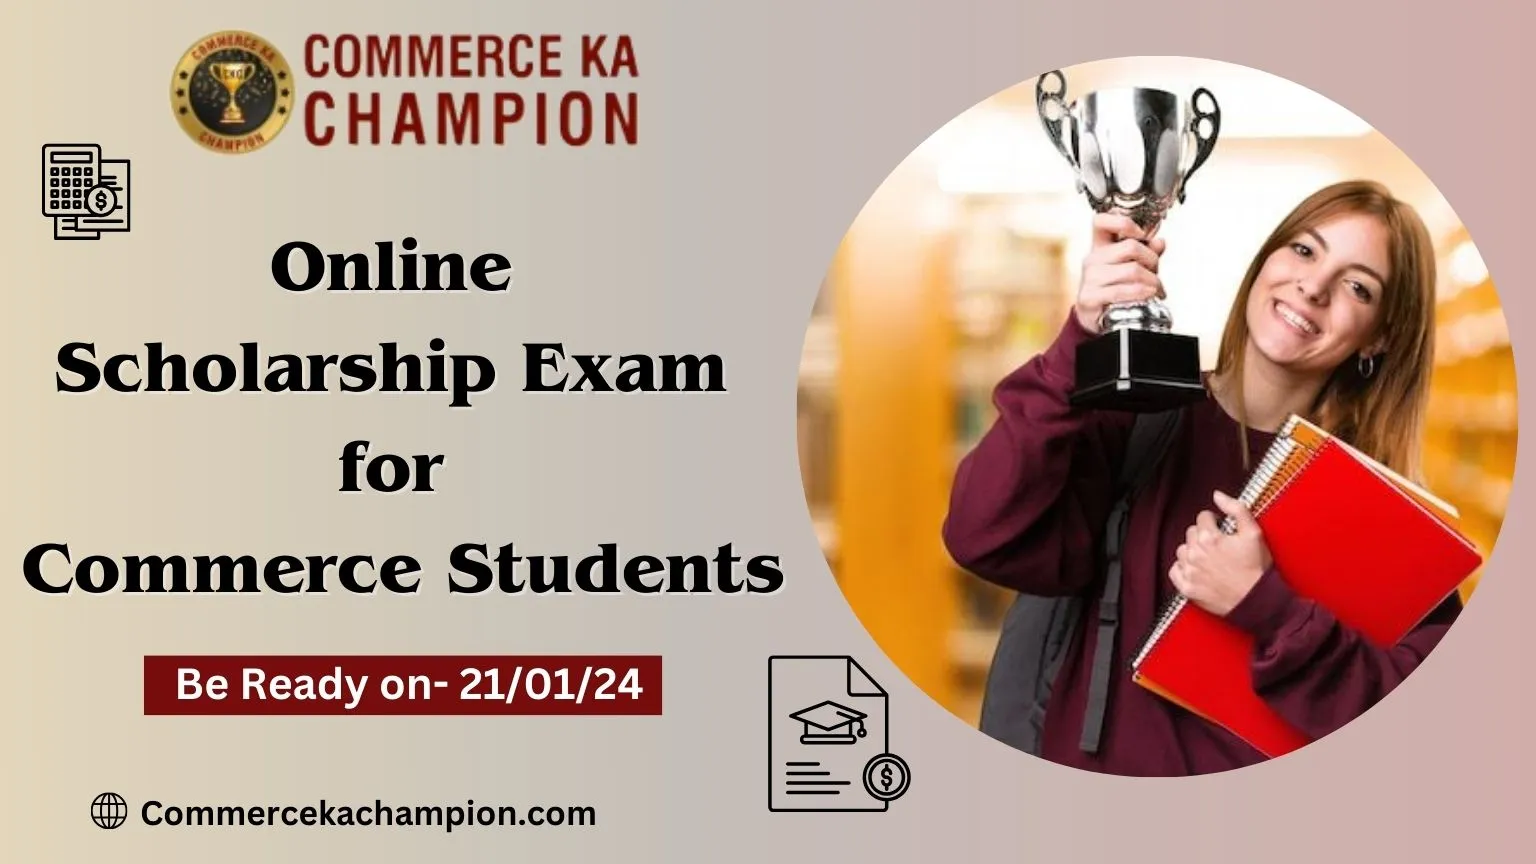 Online Scholarship Exam for Commerce Students